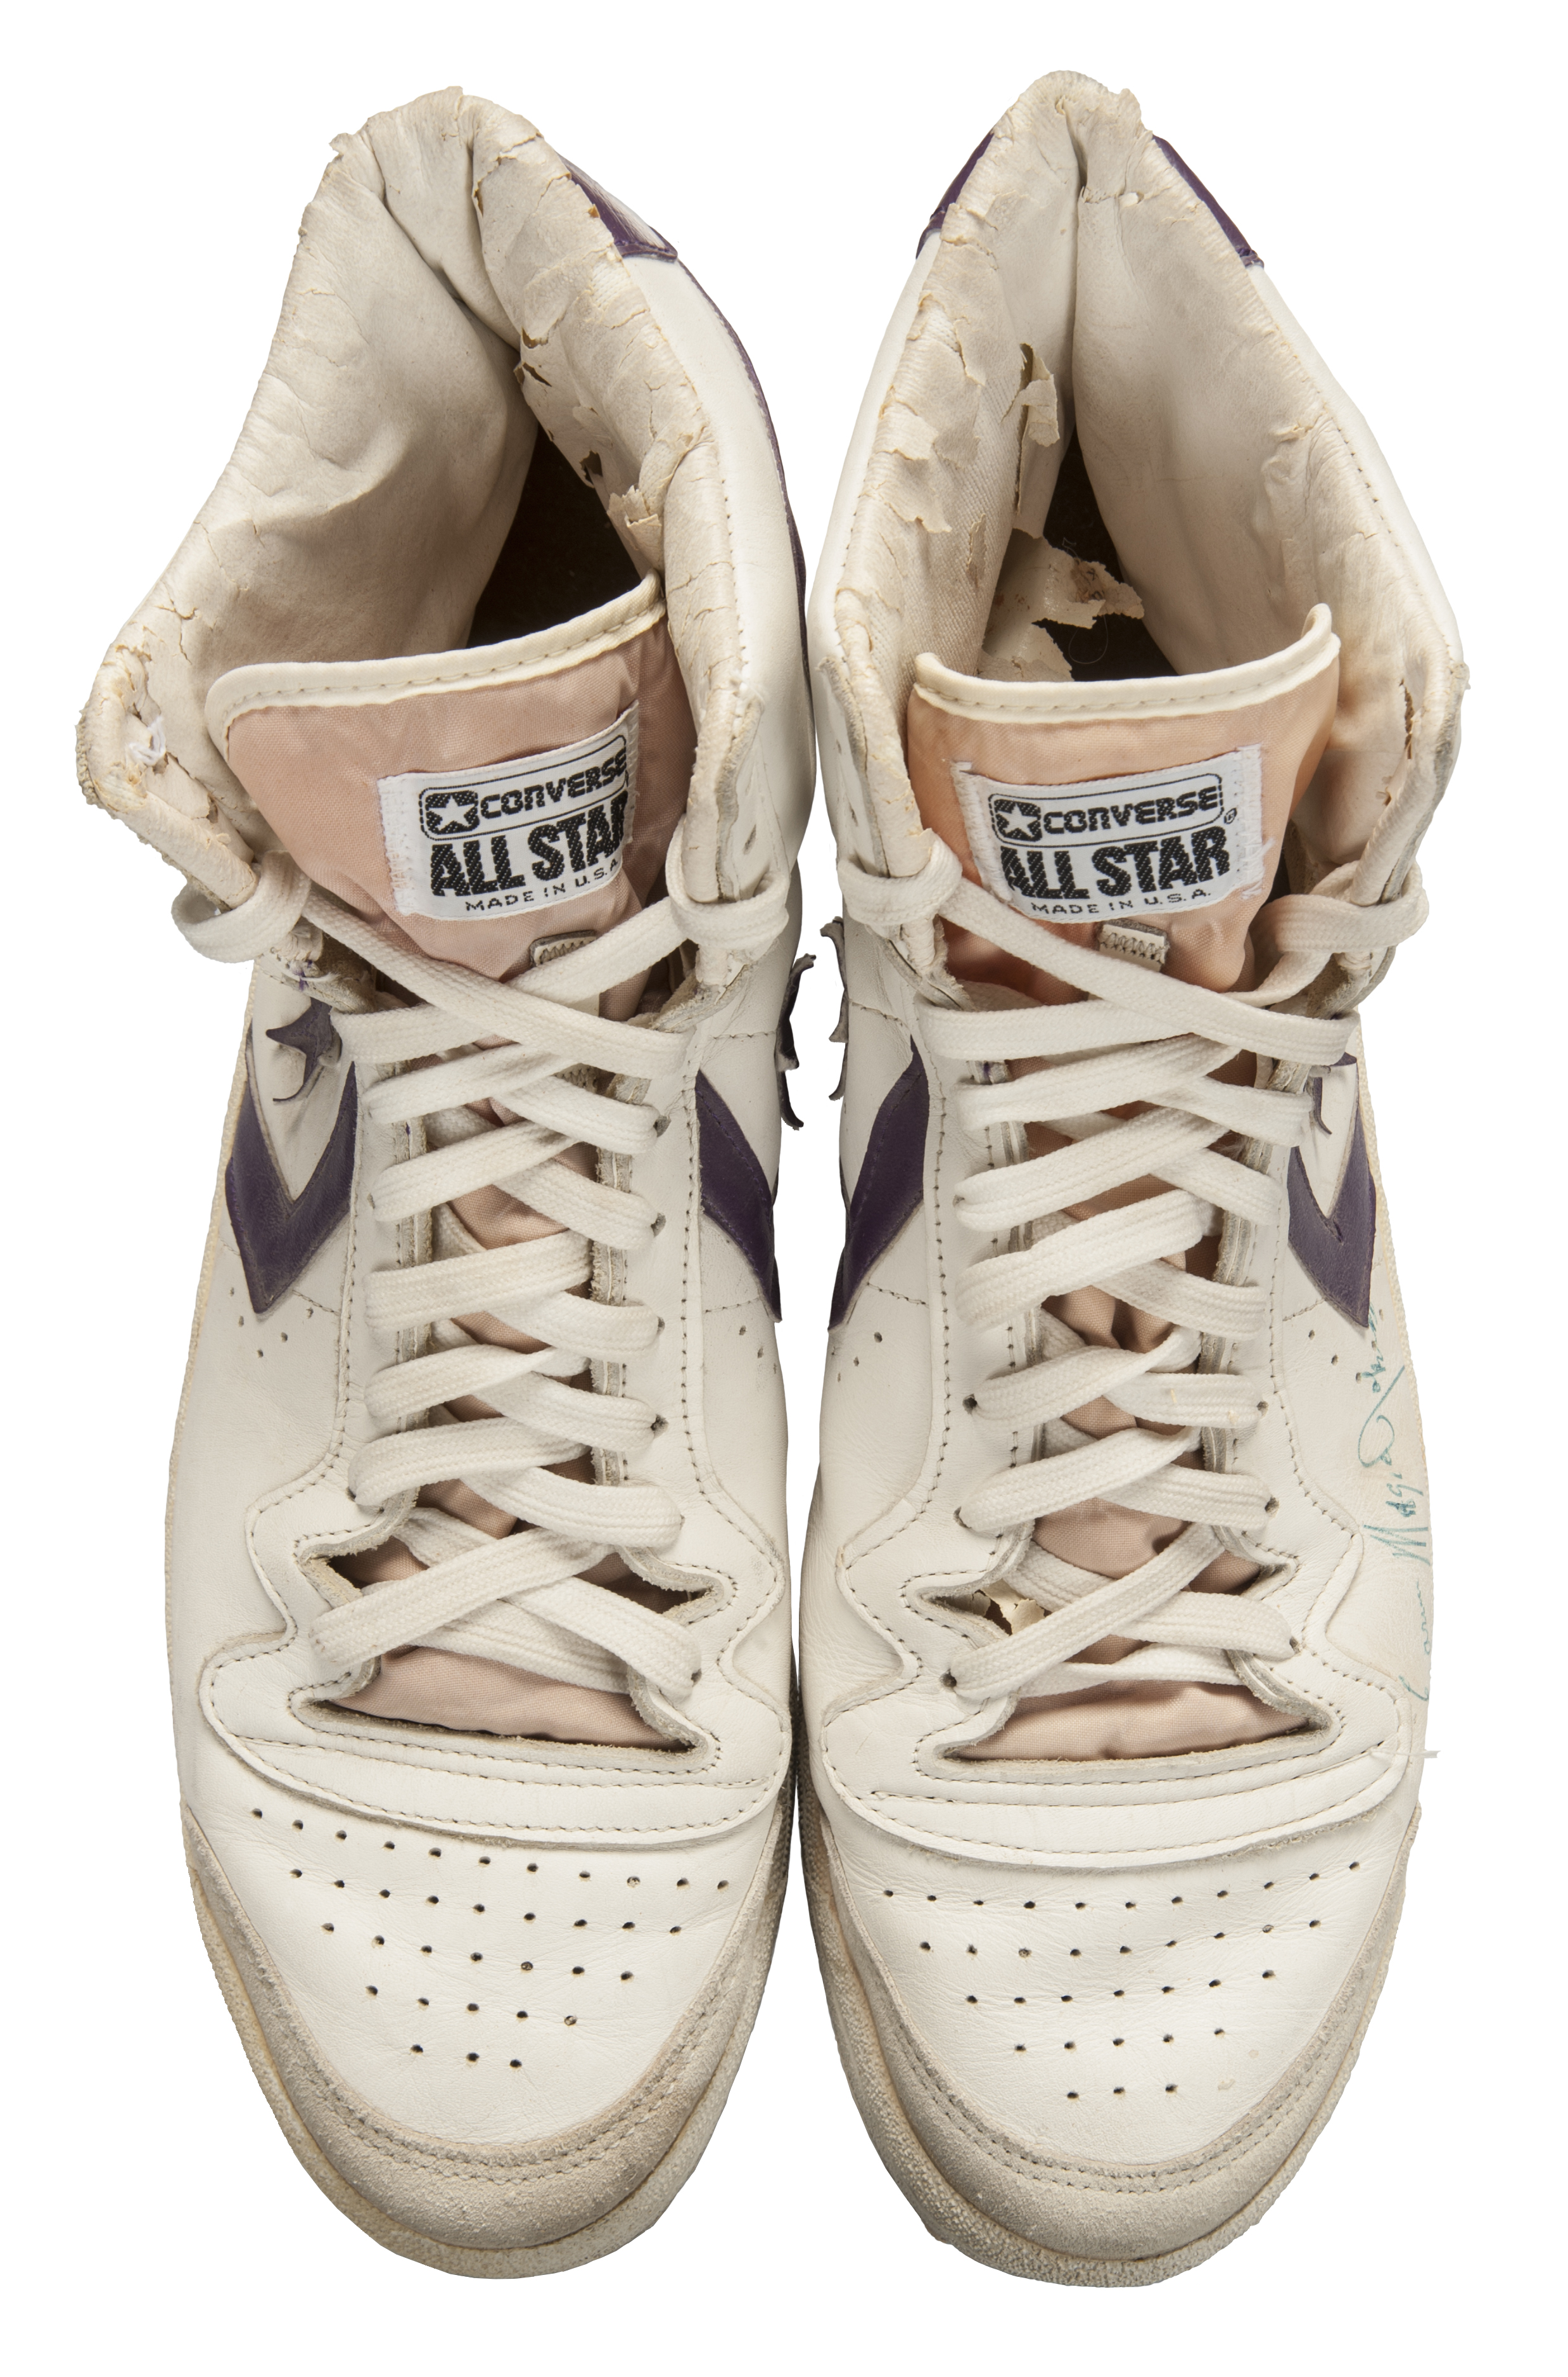 Lot Detail - Magic Johnson Game Used Converse Sneakers, circa 1983-85